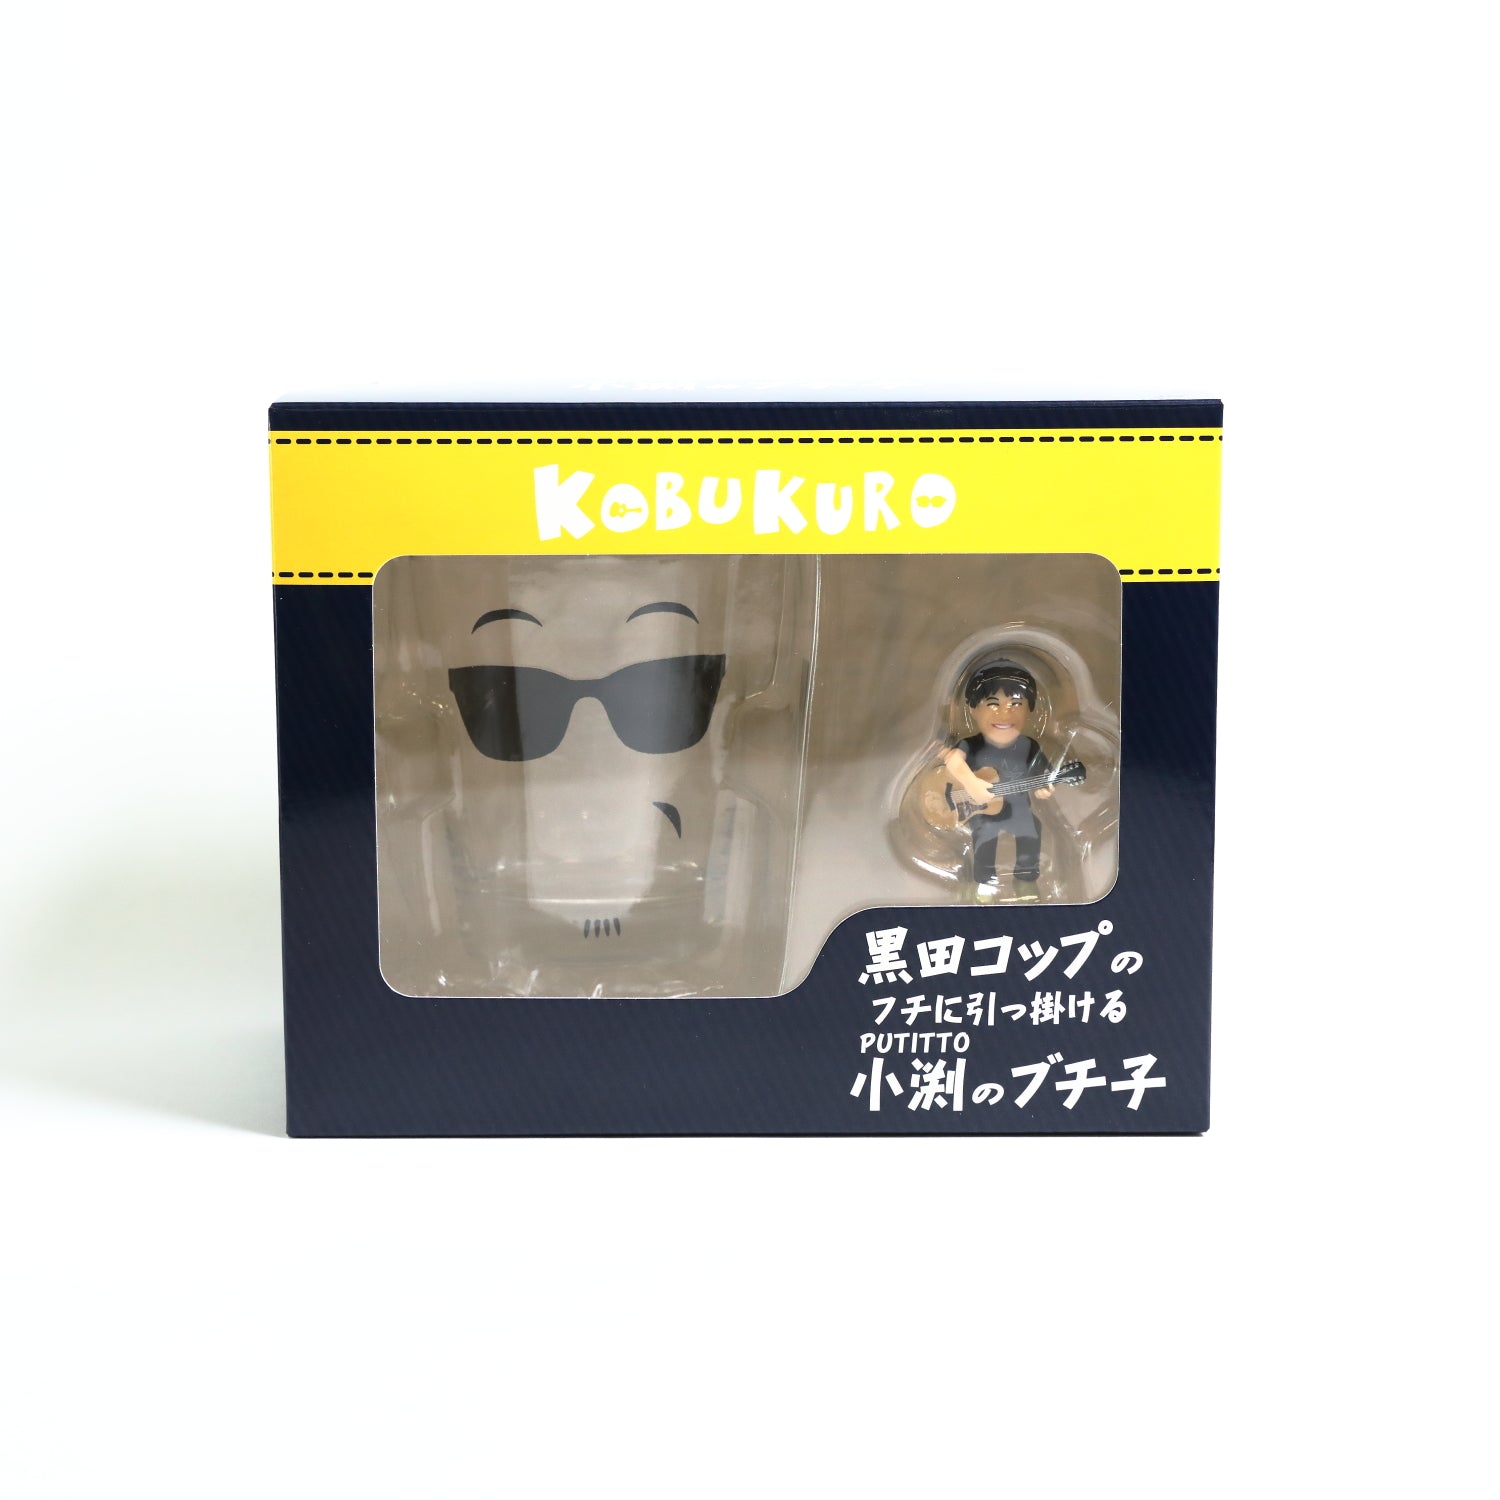 【CLASS KOBUKURO】KOBUKURO LIVE TOUR 2021 ”Star Made” at 東京ガーデンシアター〈ファンサイト会員限定盤〉 Blu-ray